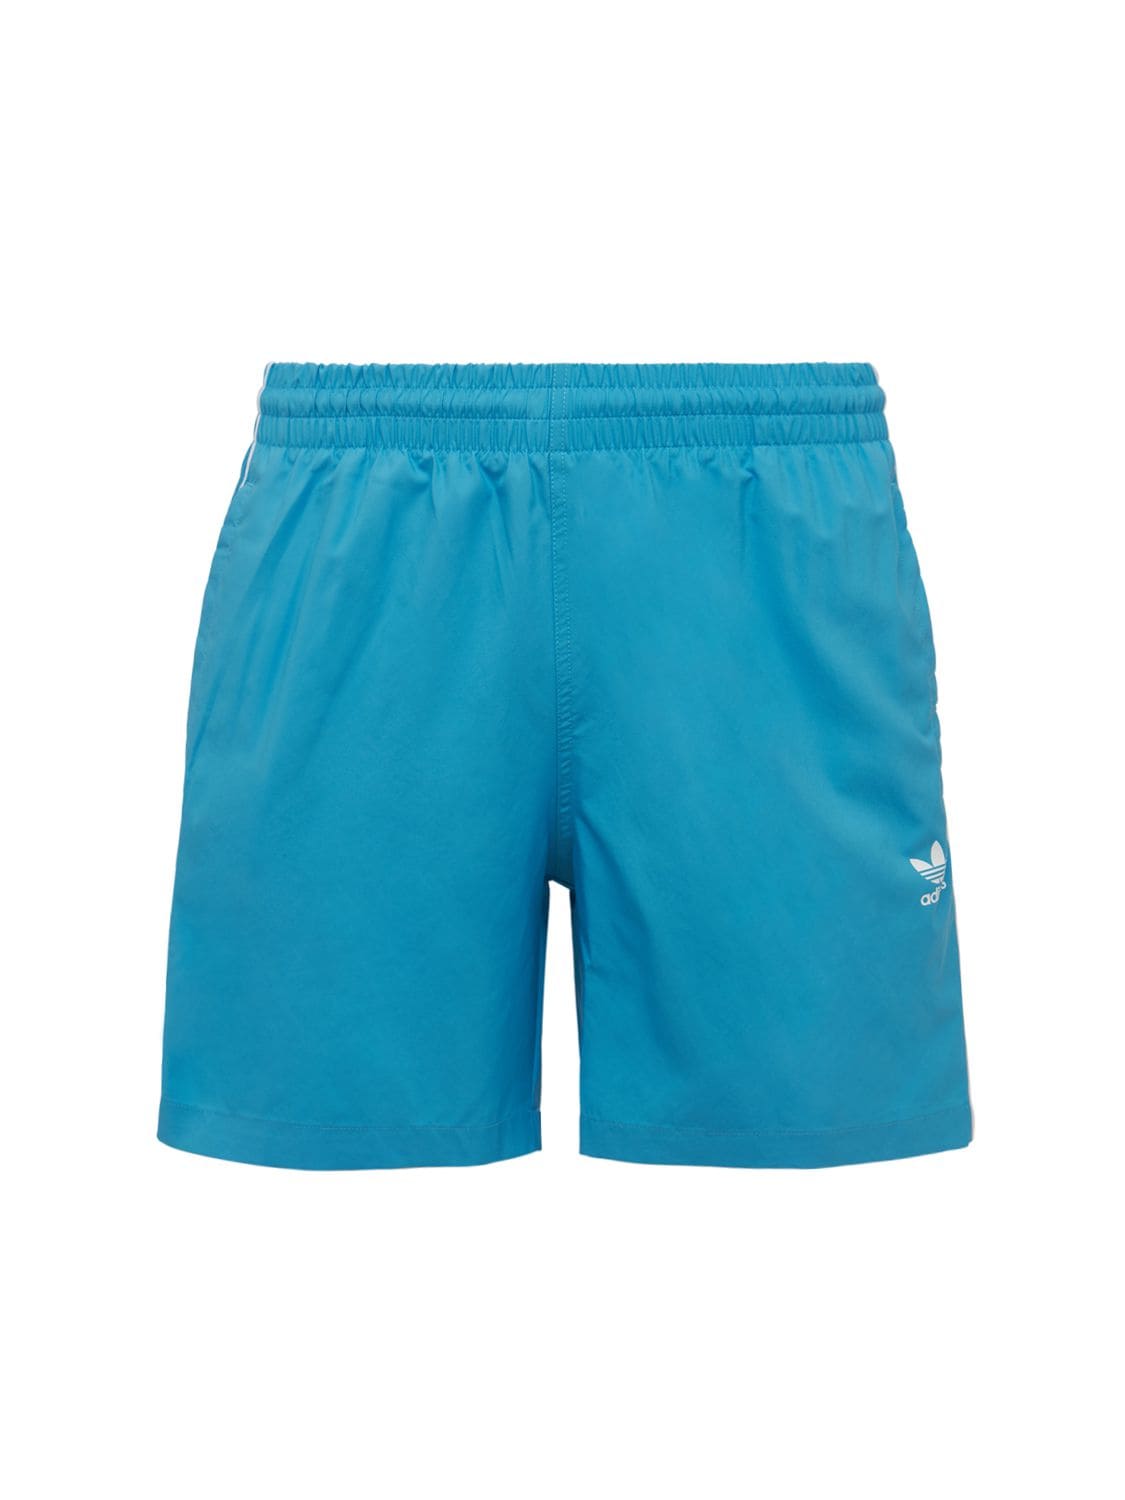 Adidas Originals Trace Recycled Fabric Shorts In Небесно-голубой | ModeSens